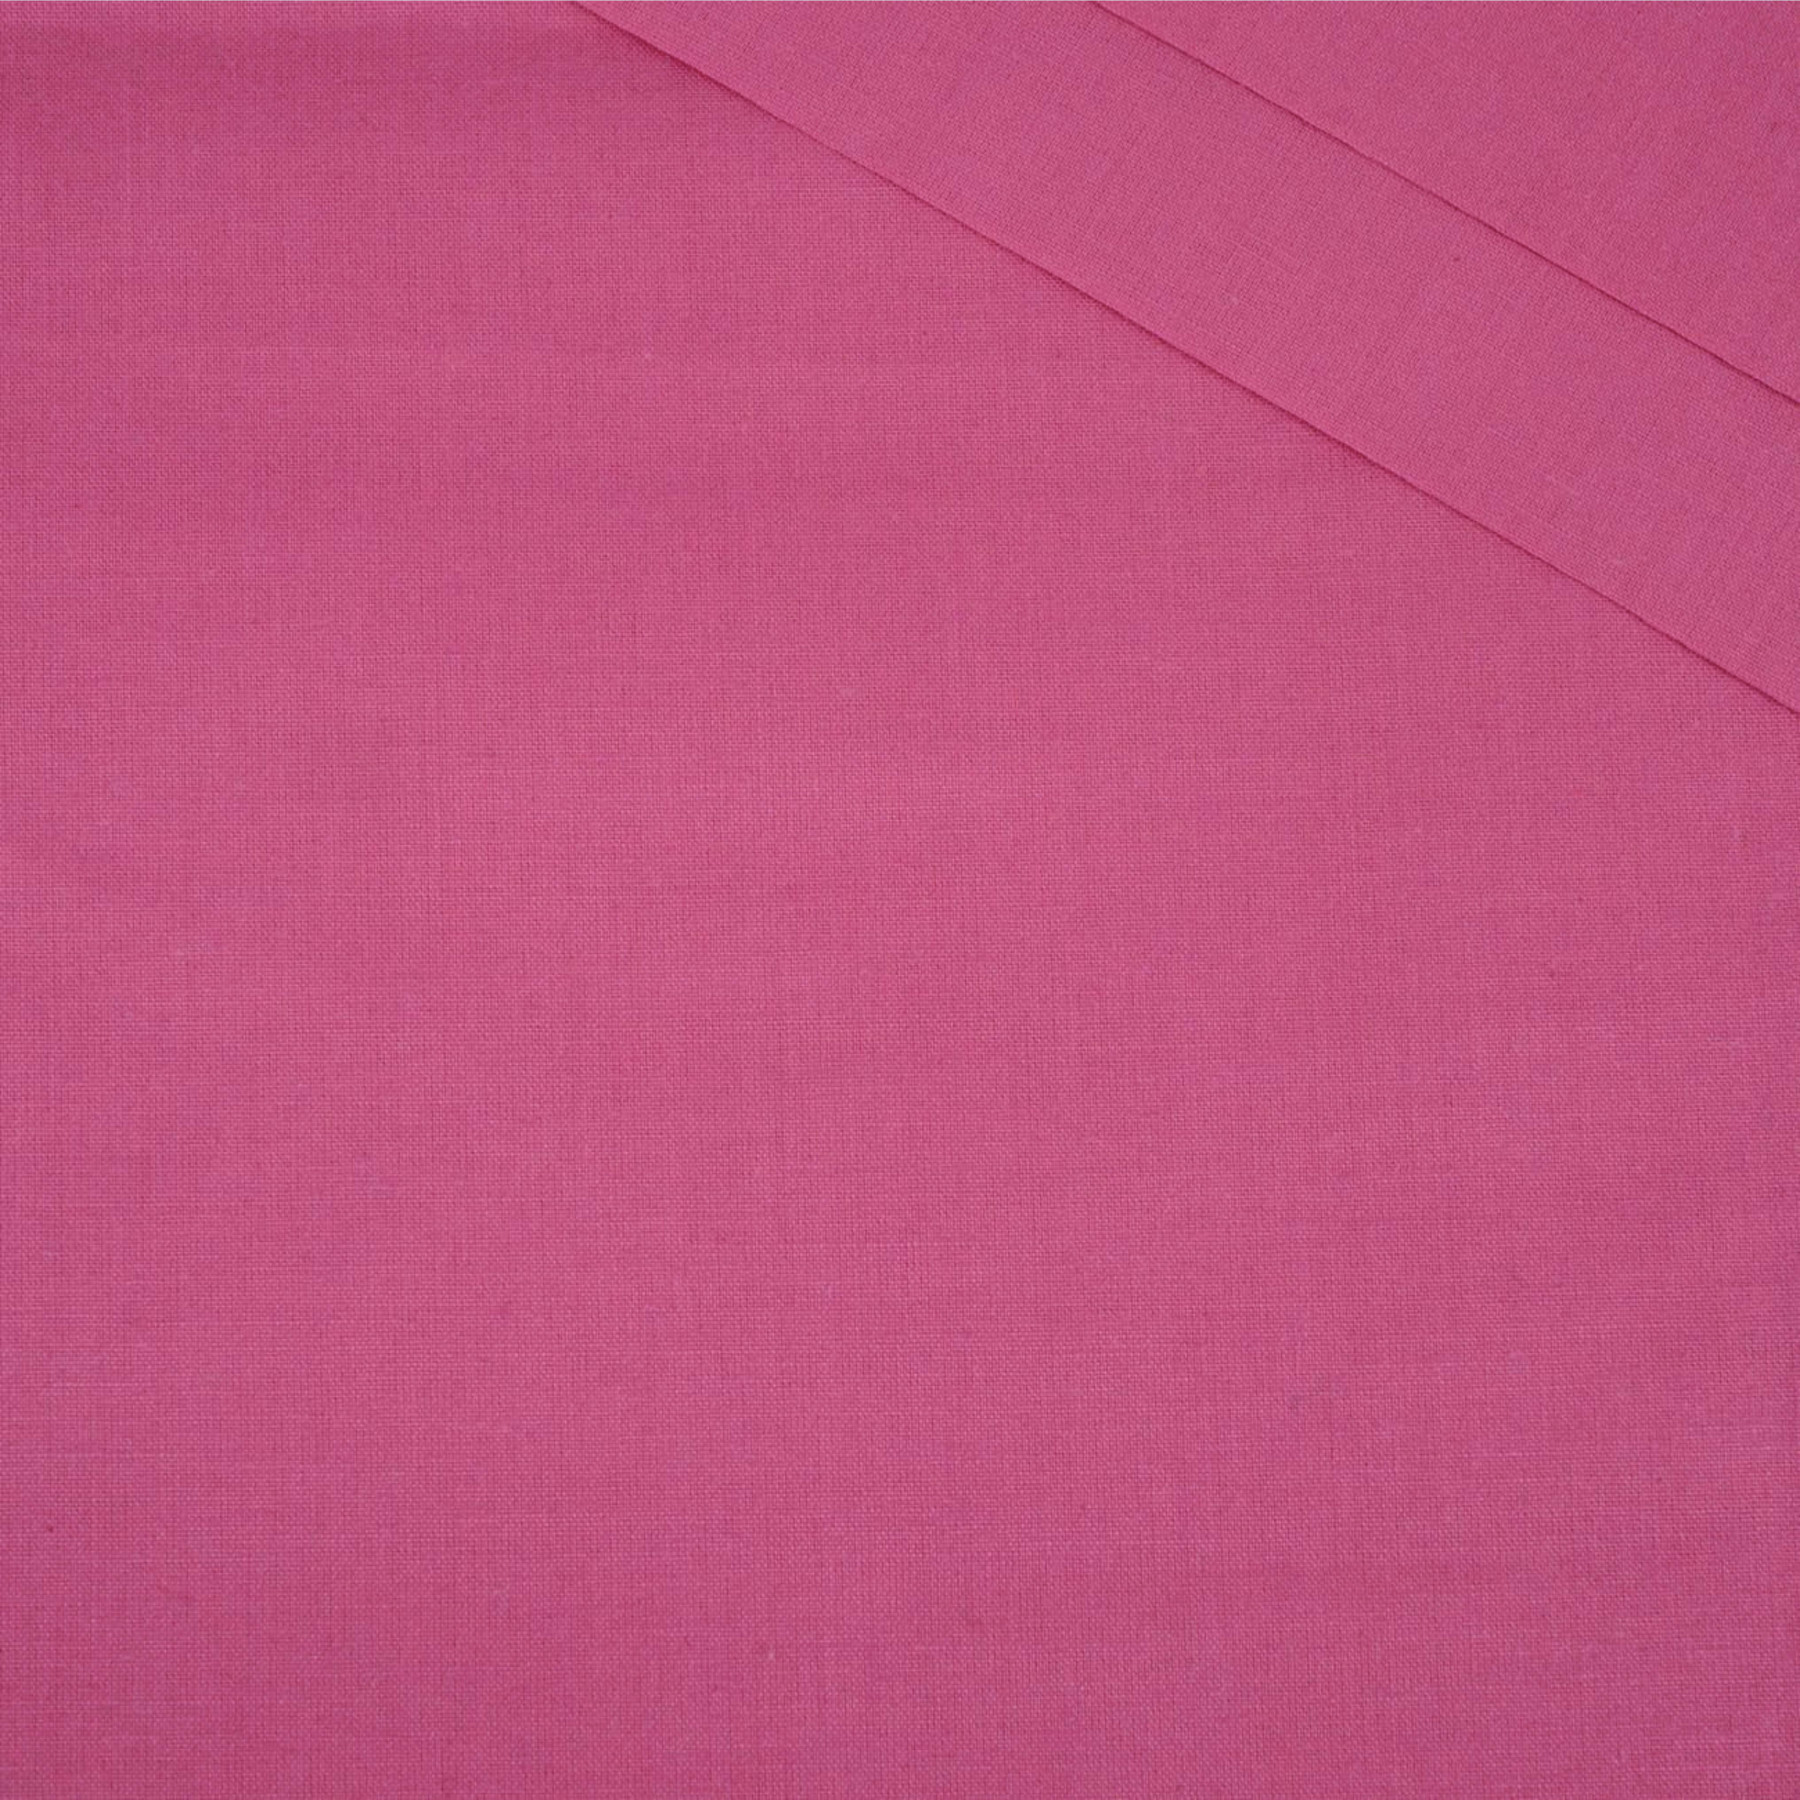 FUCHSIA - Cotton woven fabric